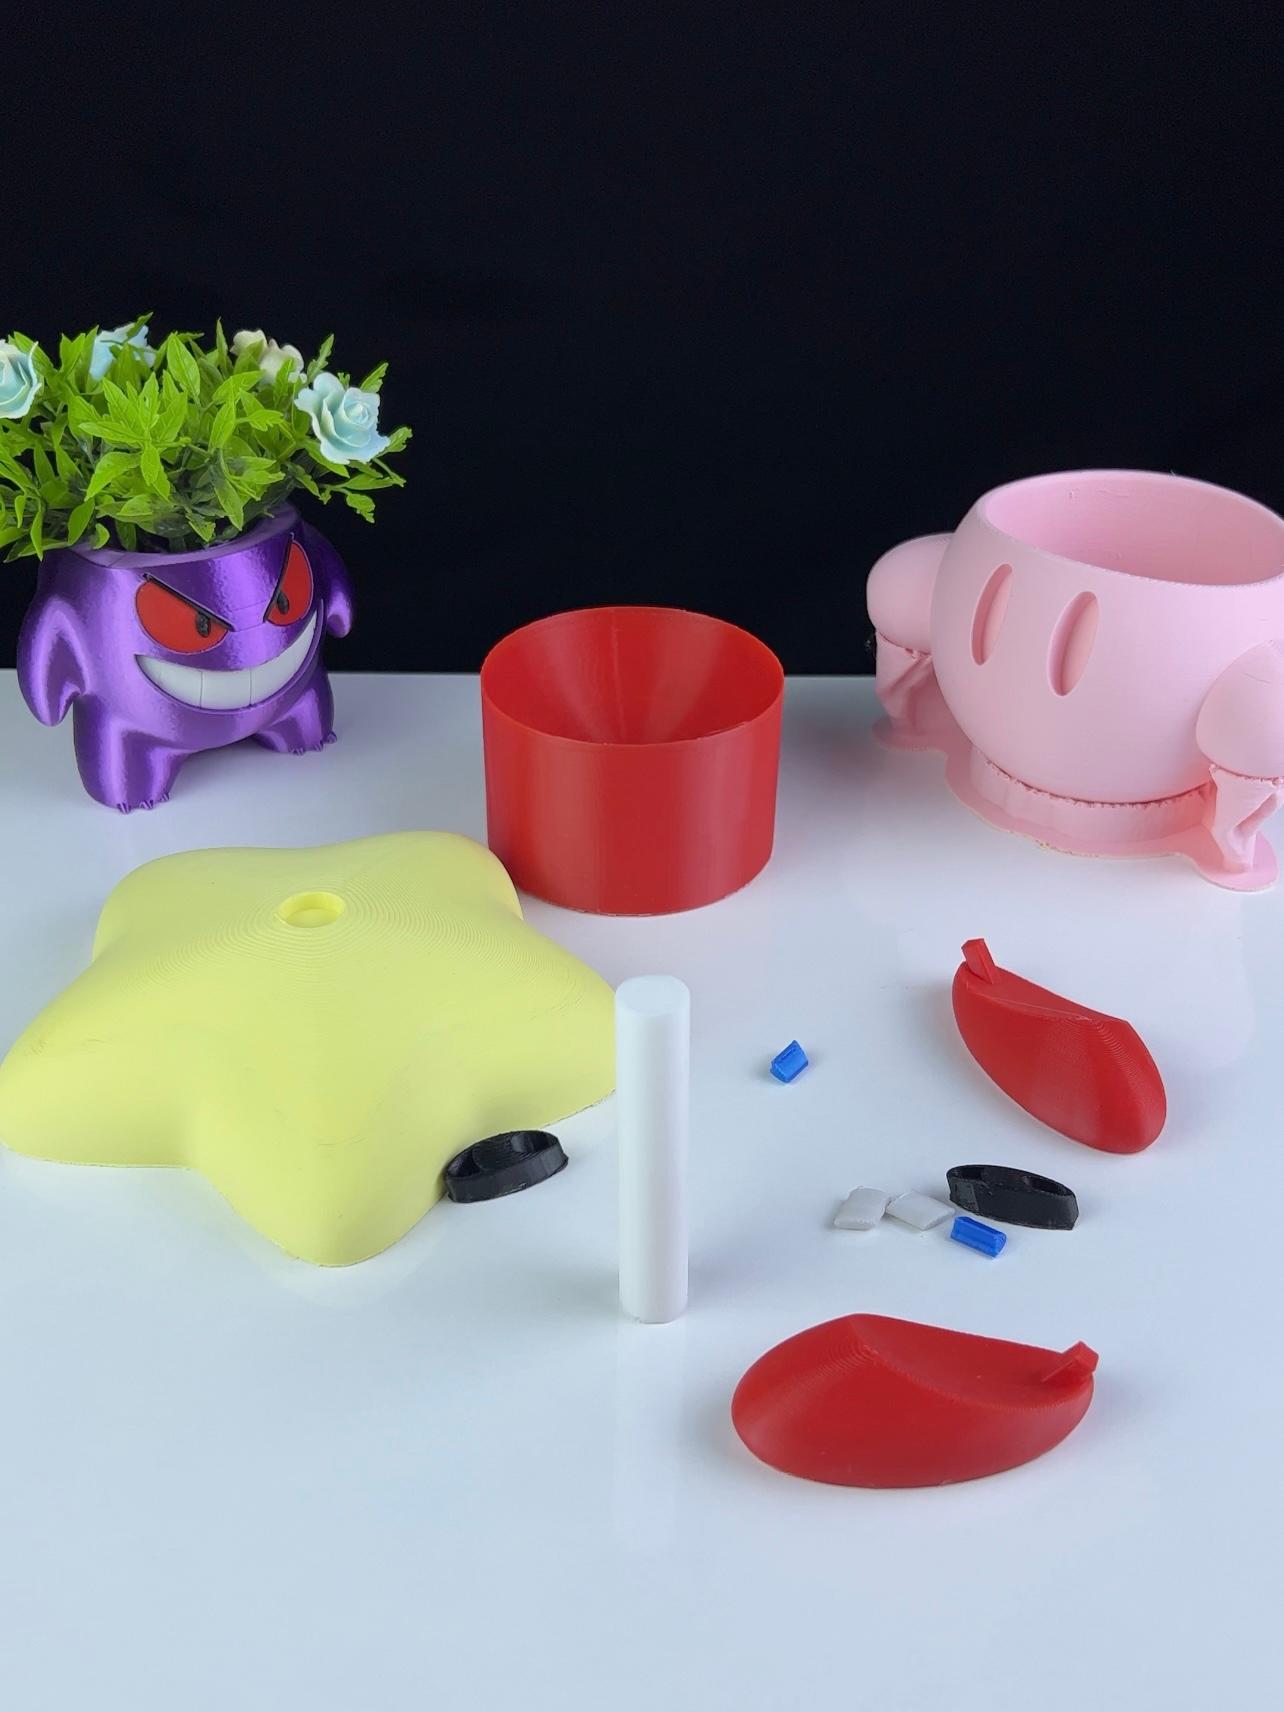 Kirby's inhales 3d model